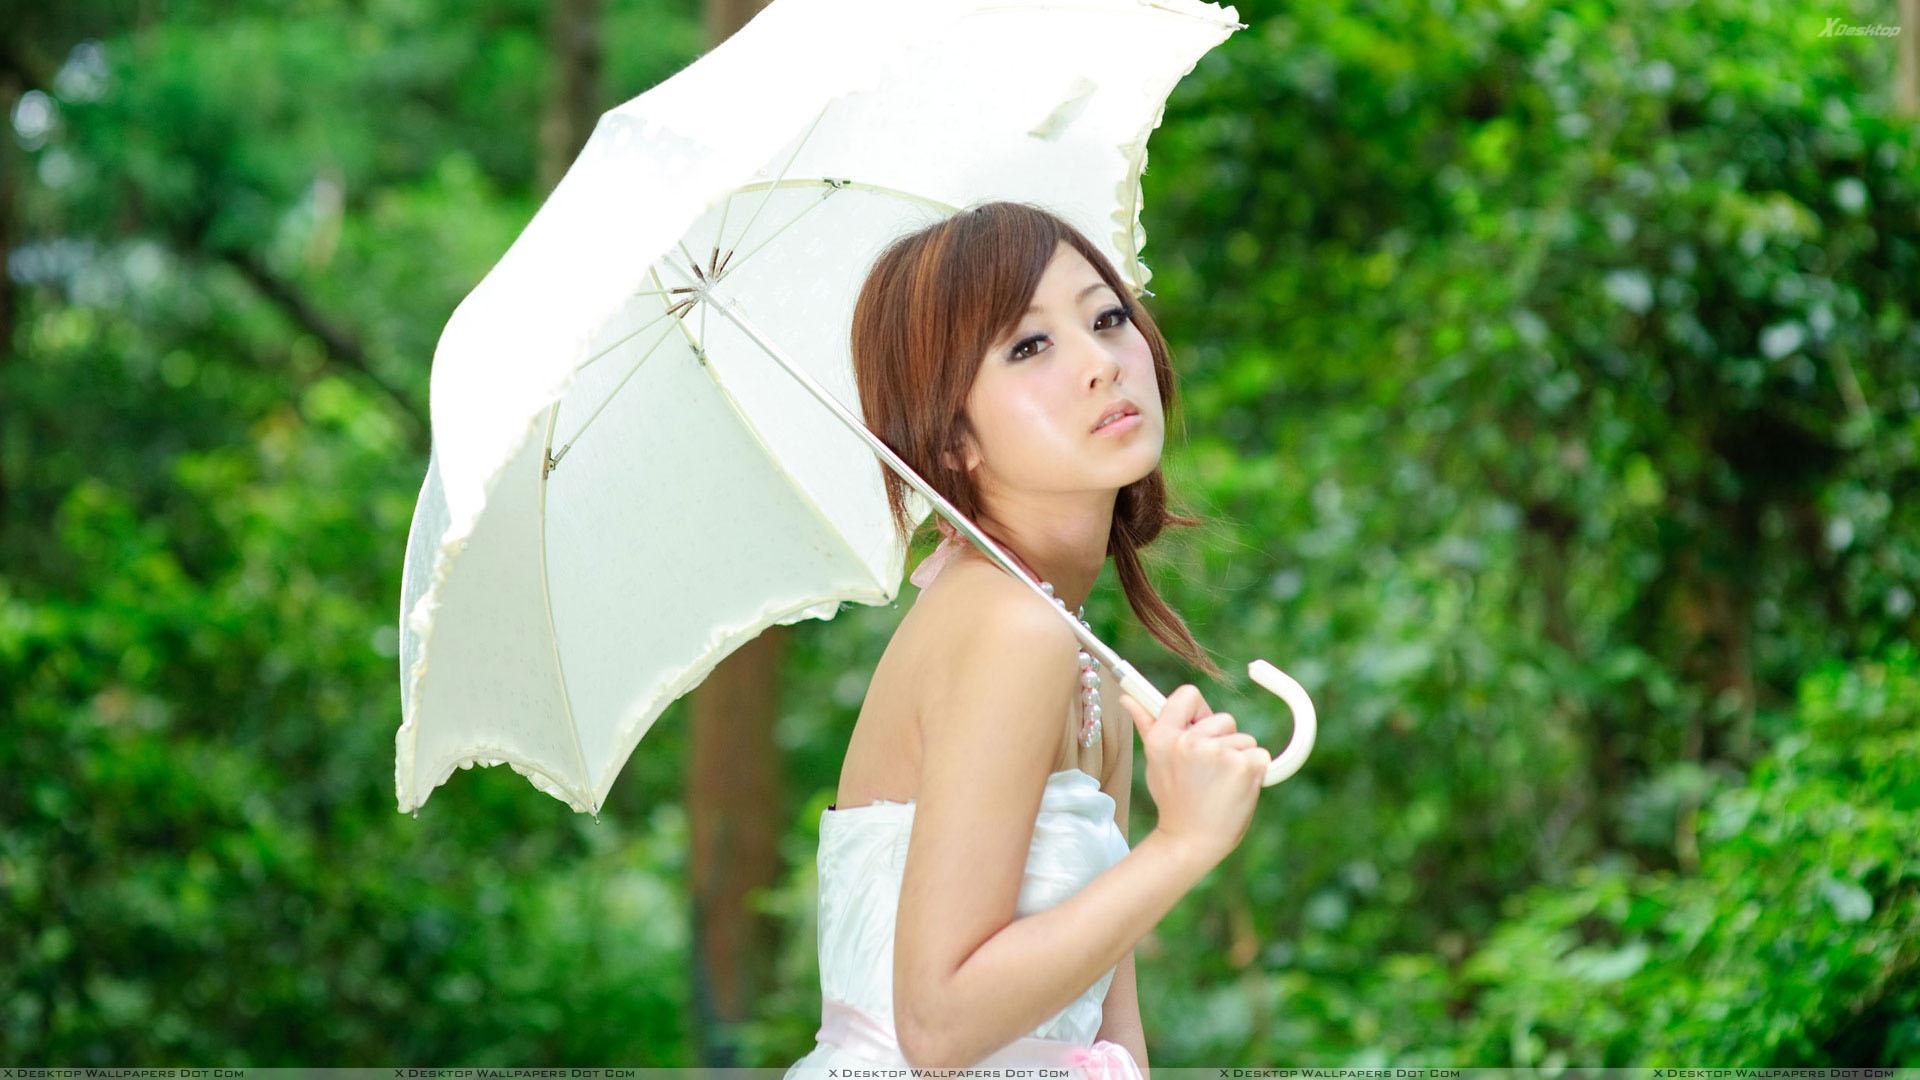 Asian Girl Thinking With White Umbrella in Green Garden